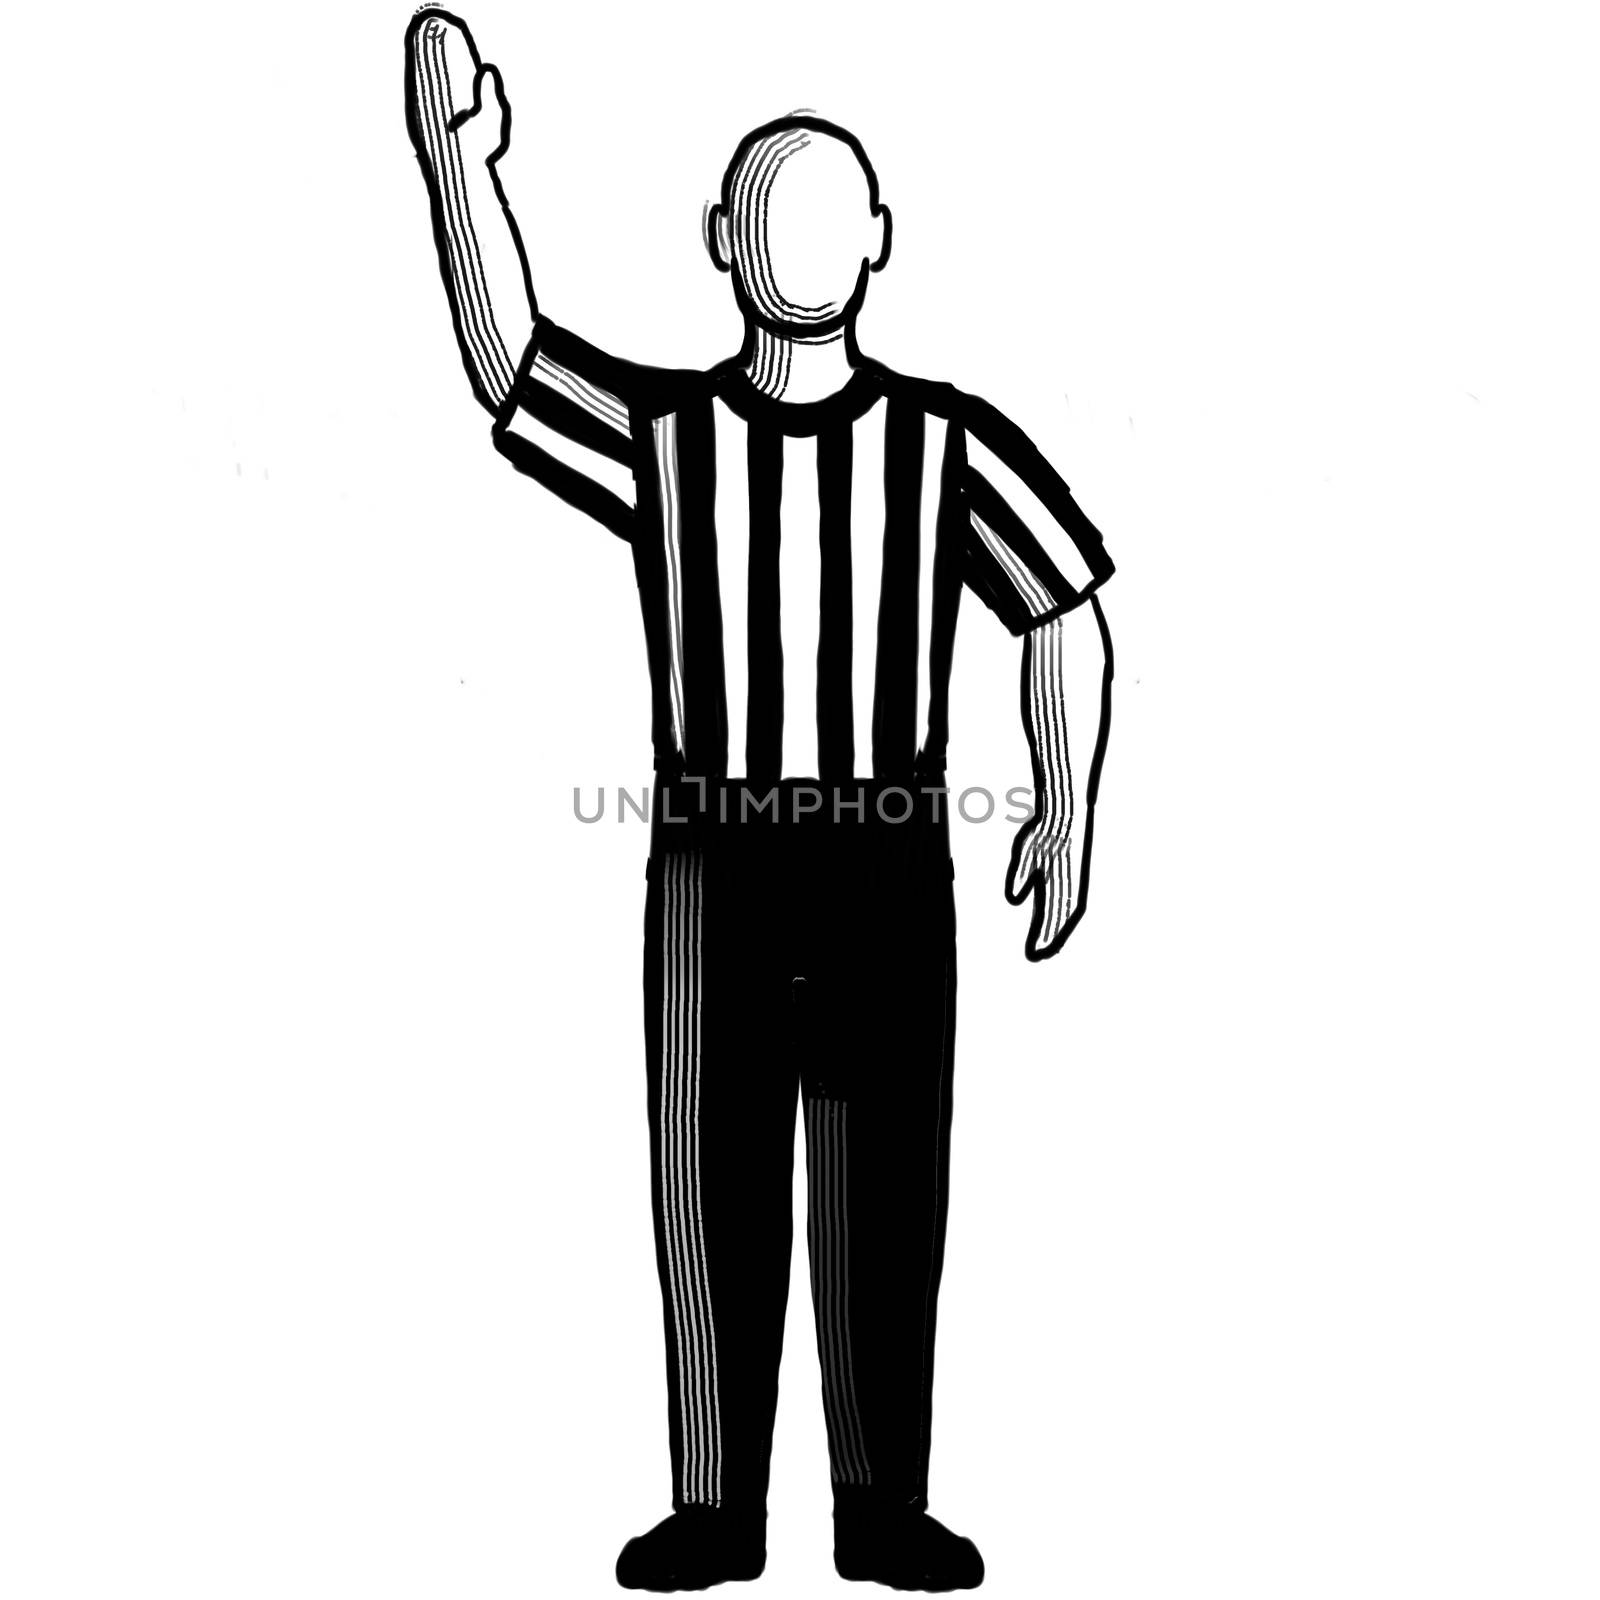 Basketball Referee stop clock Hand Signal Retro Black and White by patrimonio